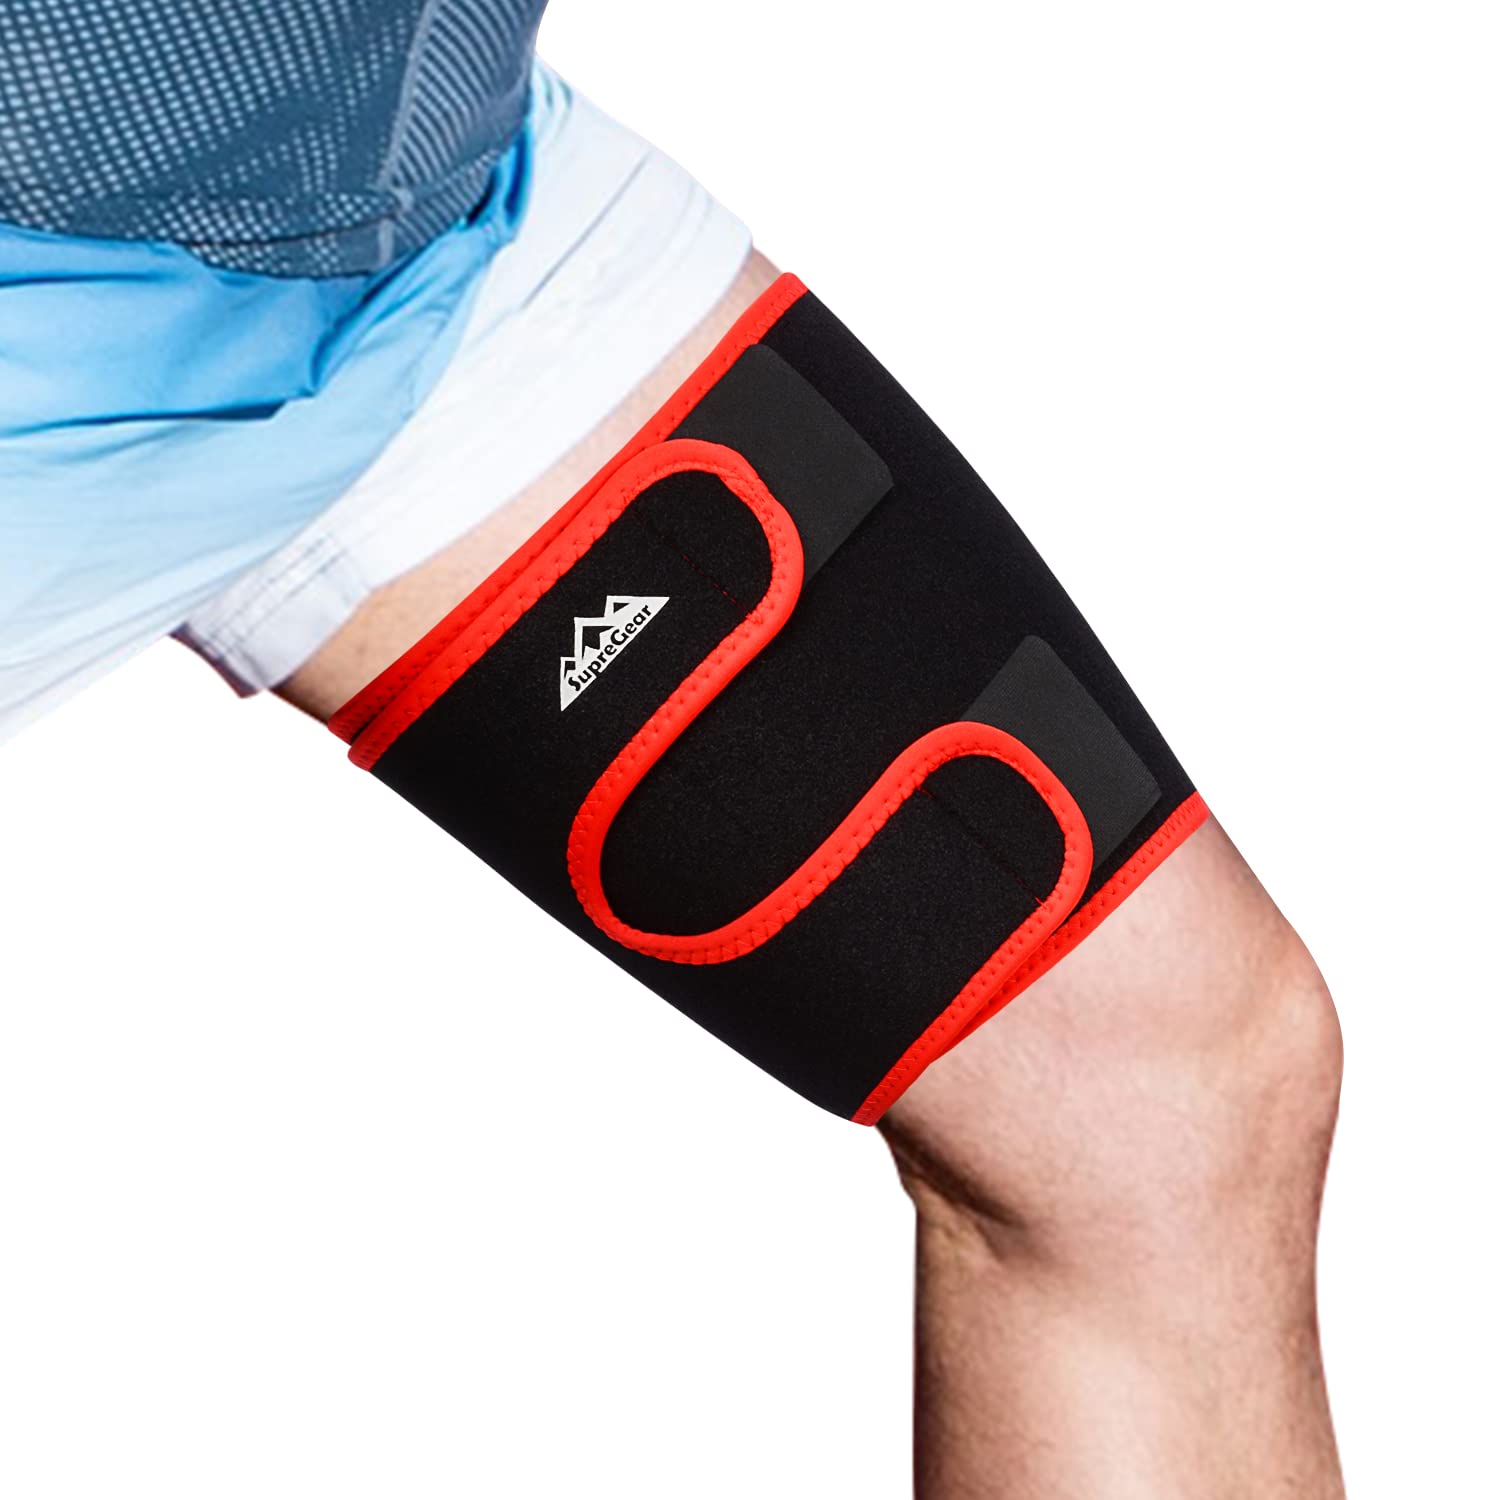 Thigh Brace,hamstring Quad Wrap,adjustable Compression Sleeve Support